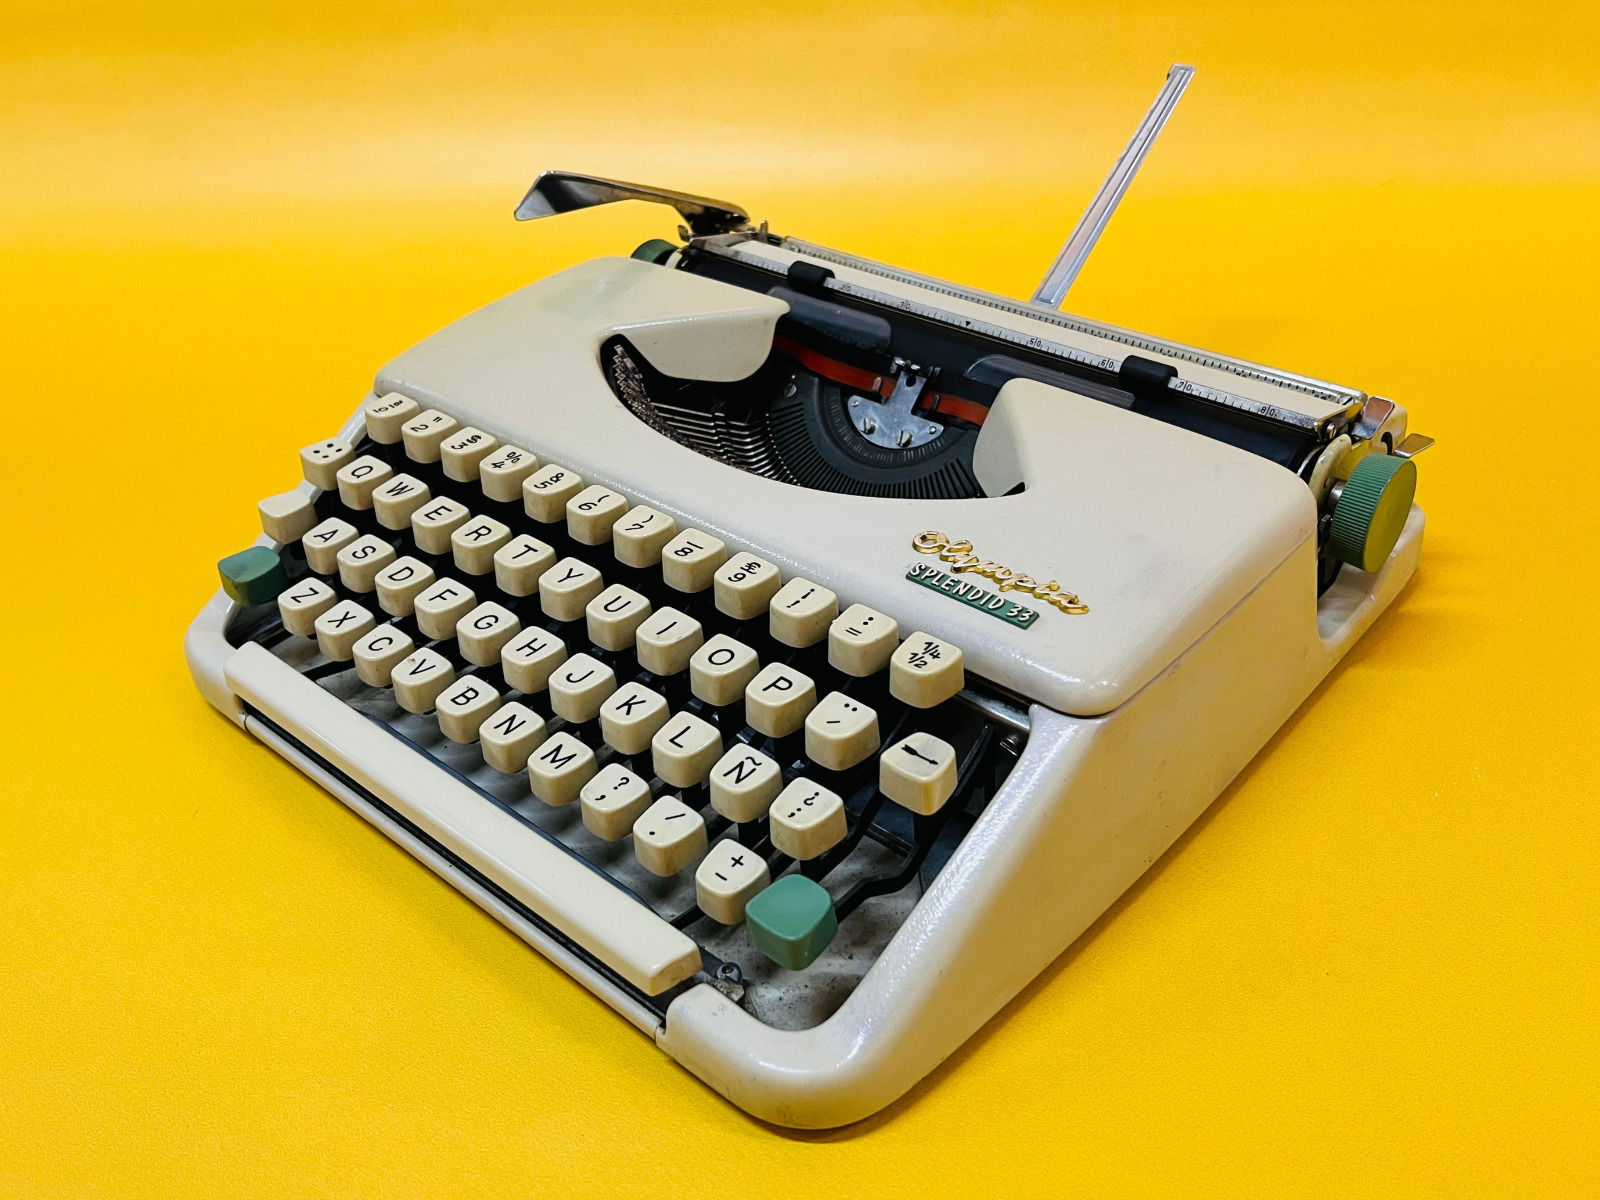 OLYMPIA SPLENDID 33 Working Typewriter Beige Typewriter with Case Portable Gift